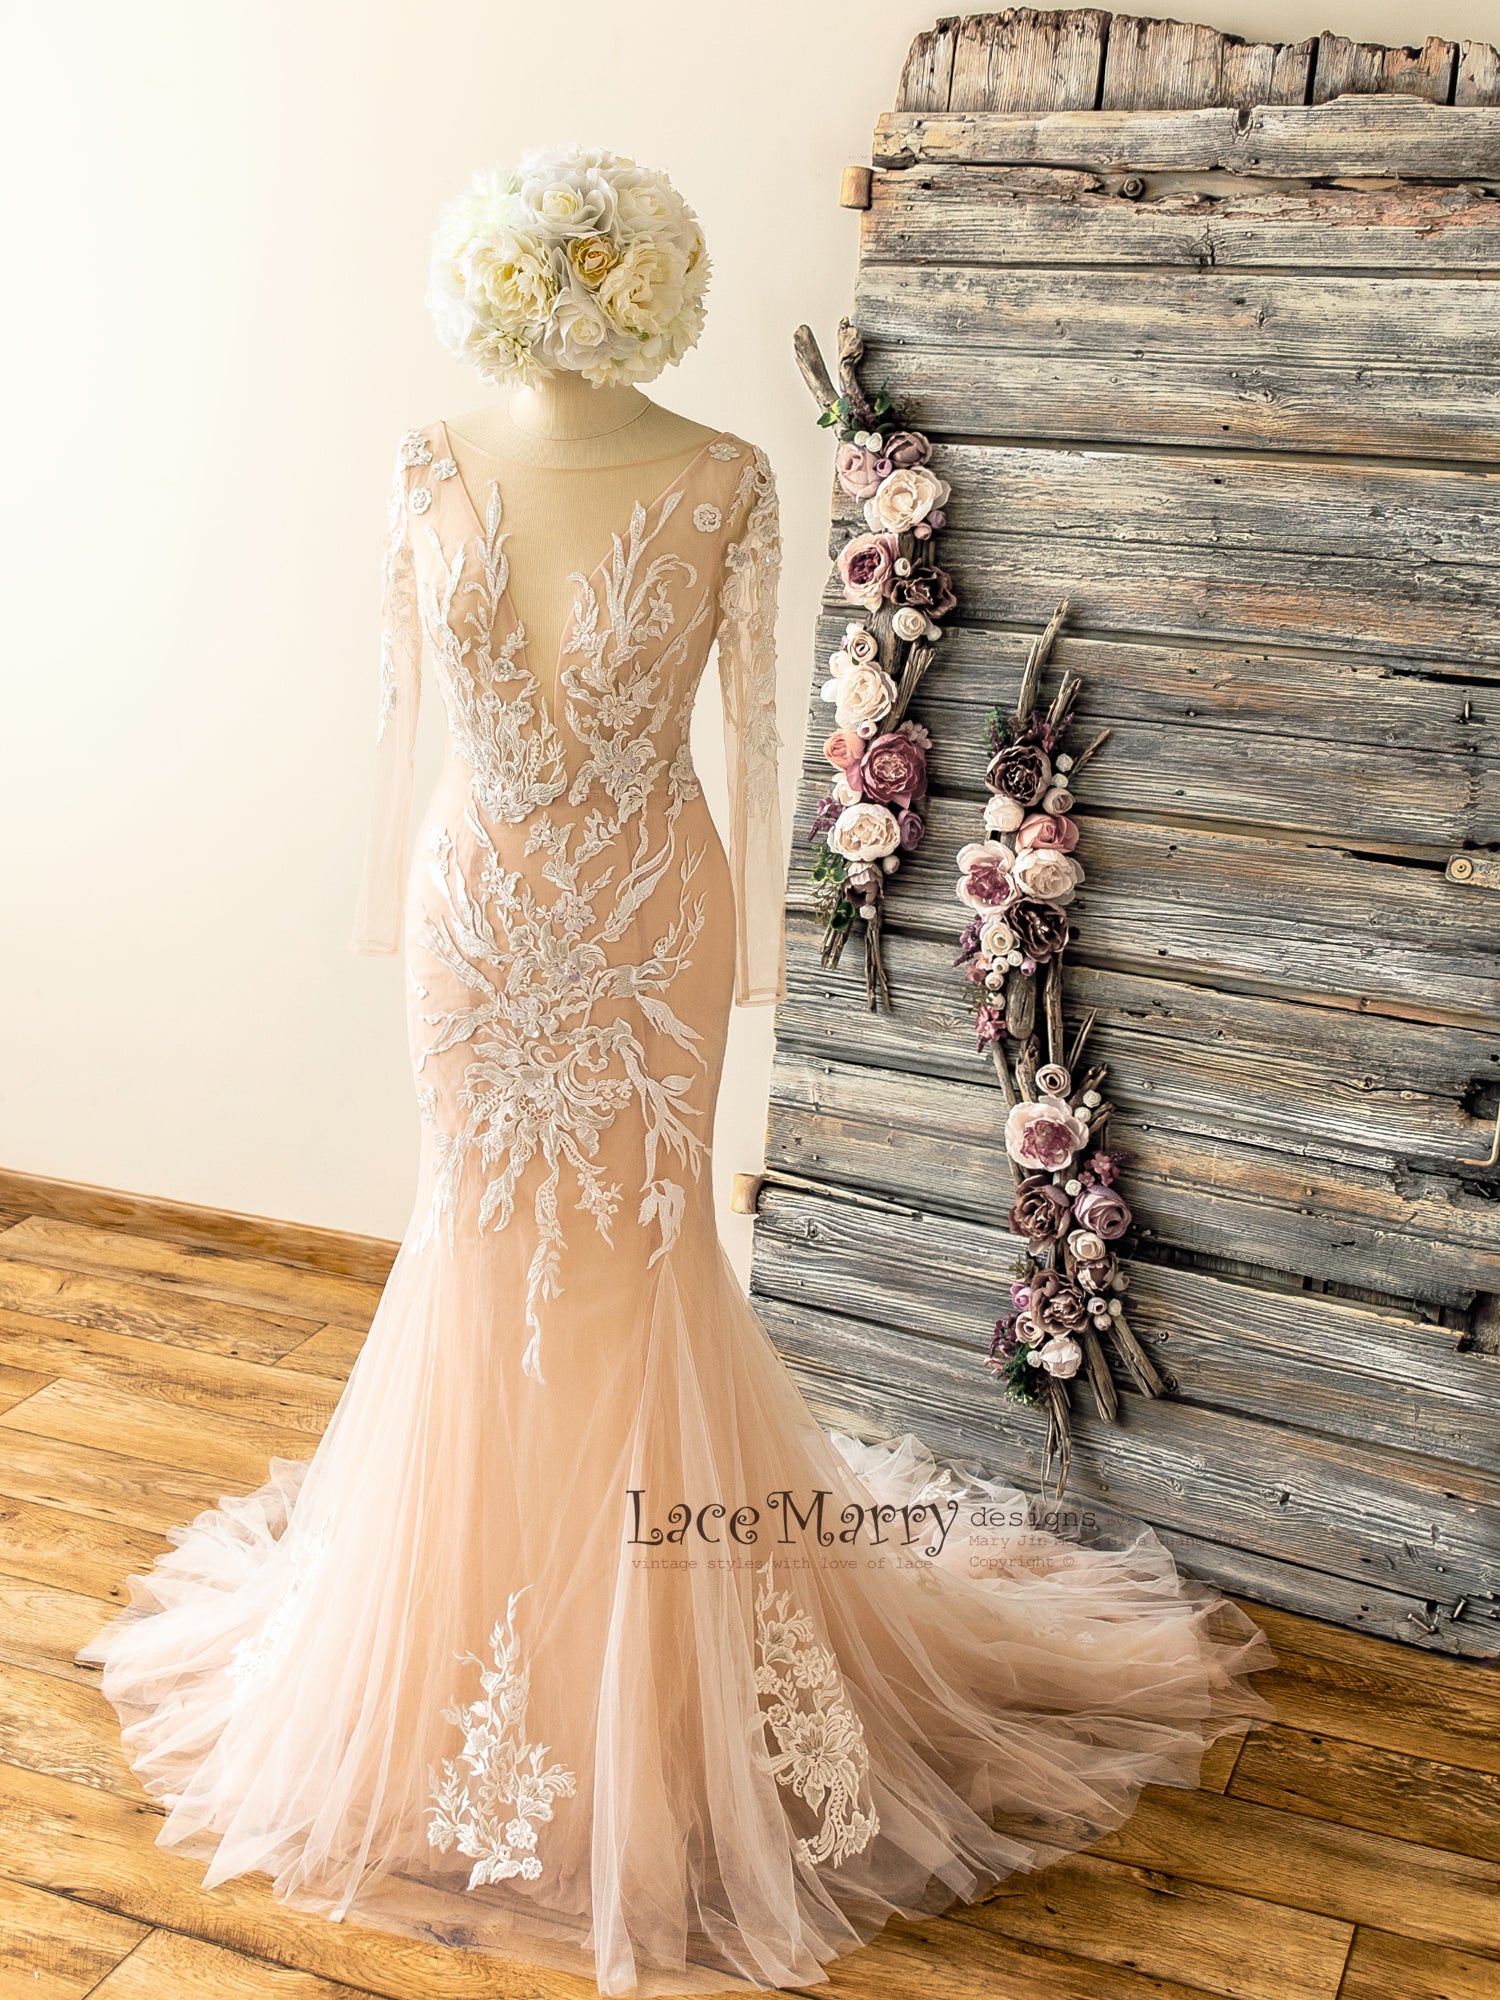 handmade lace wedding dress